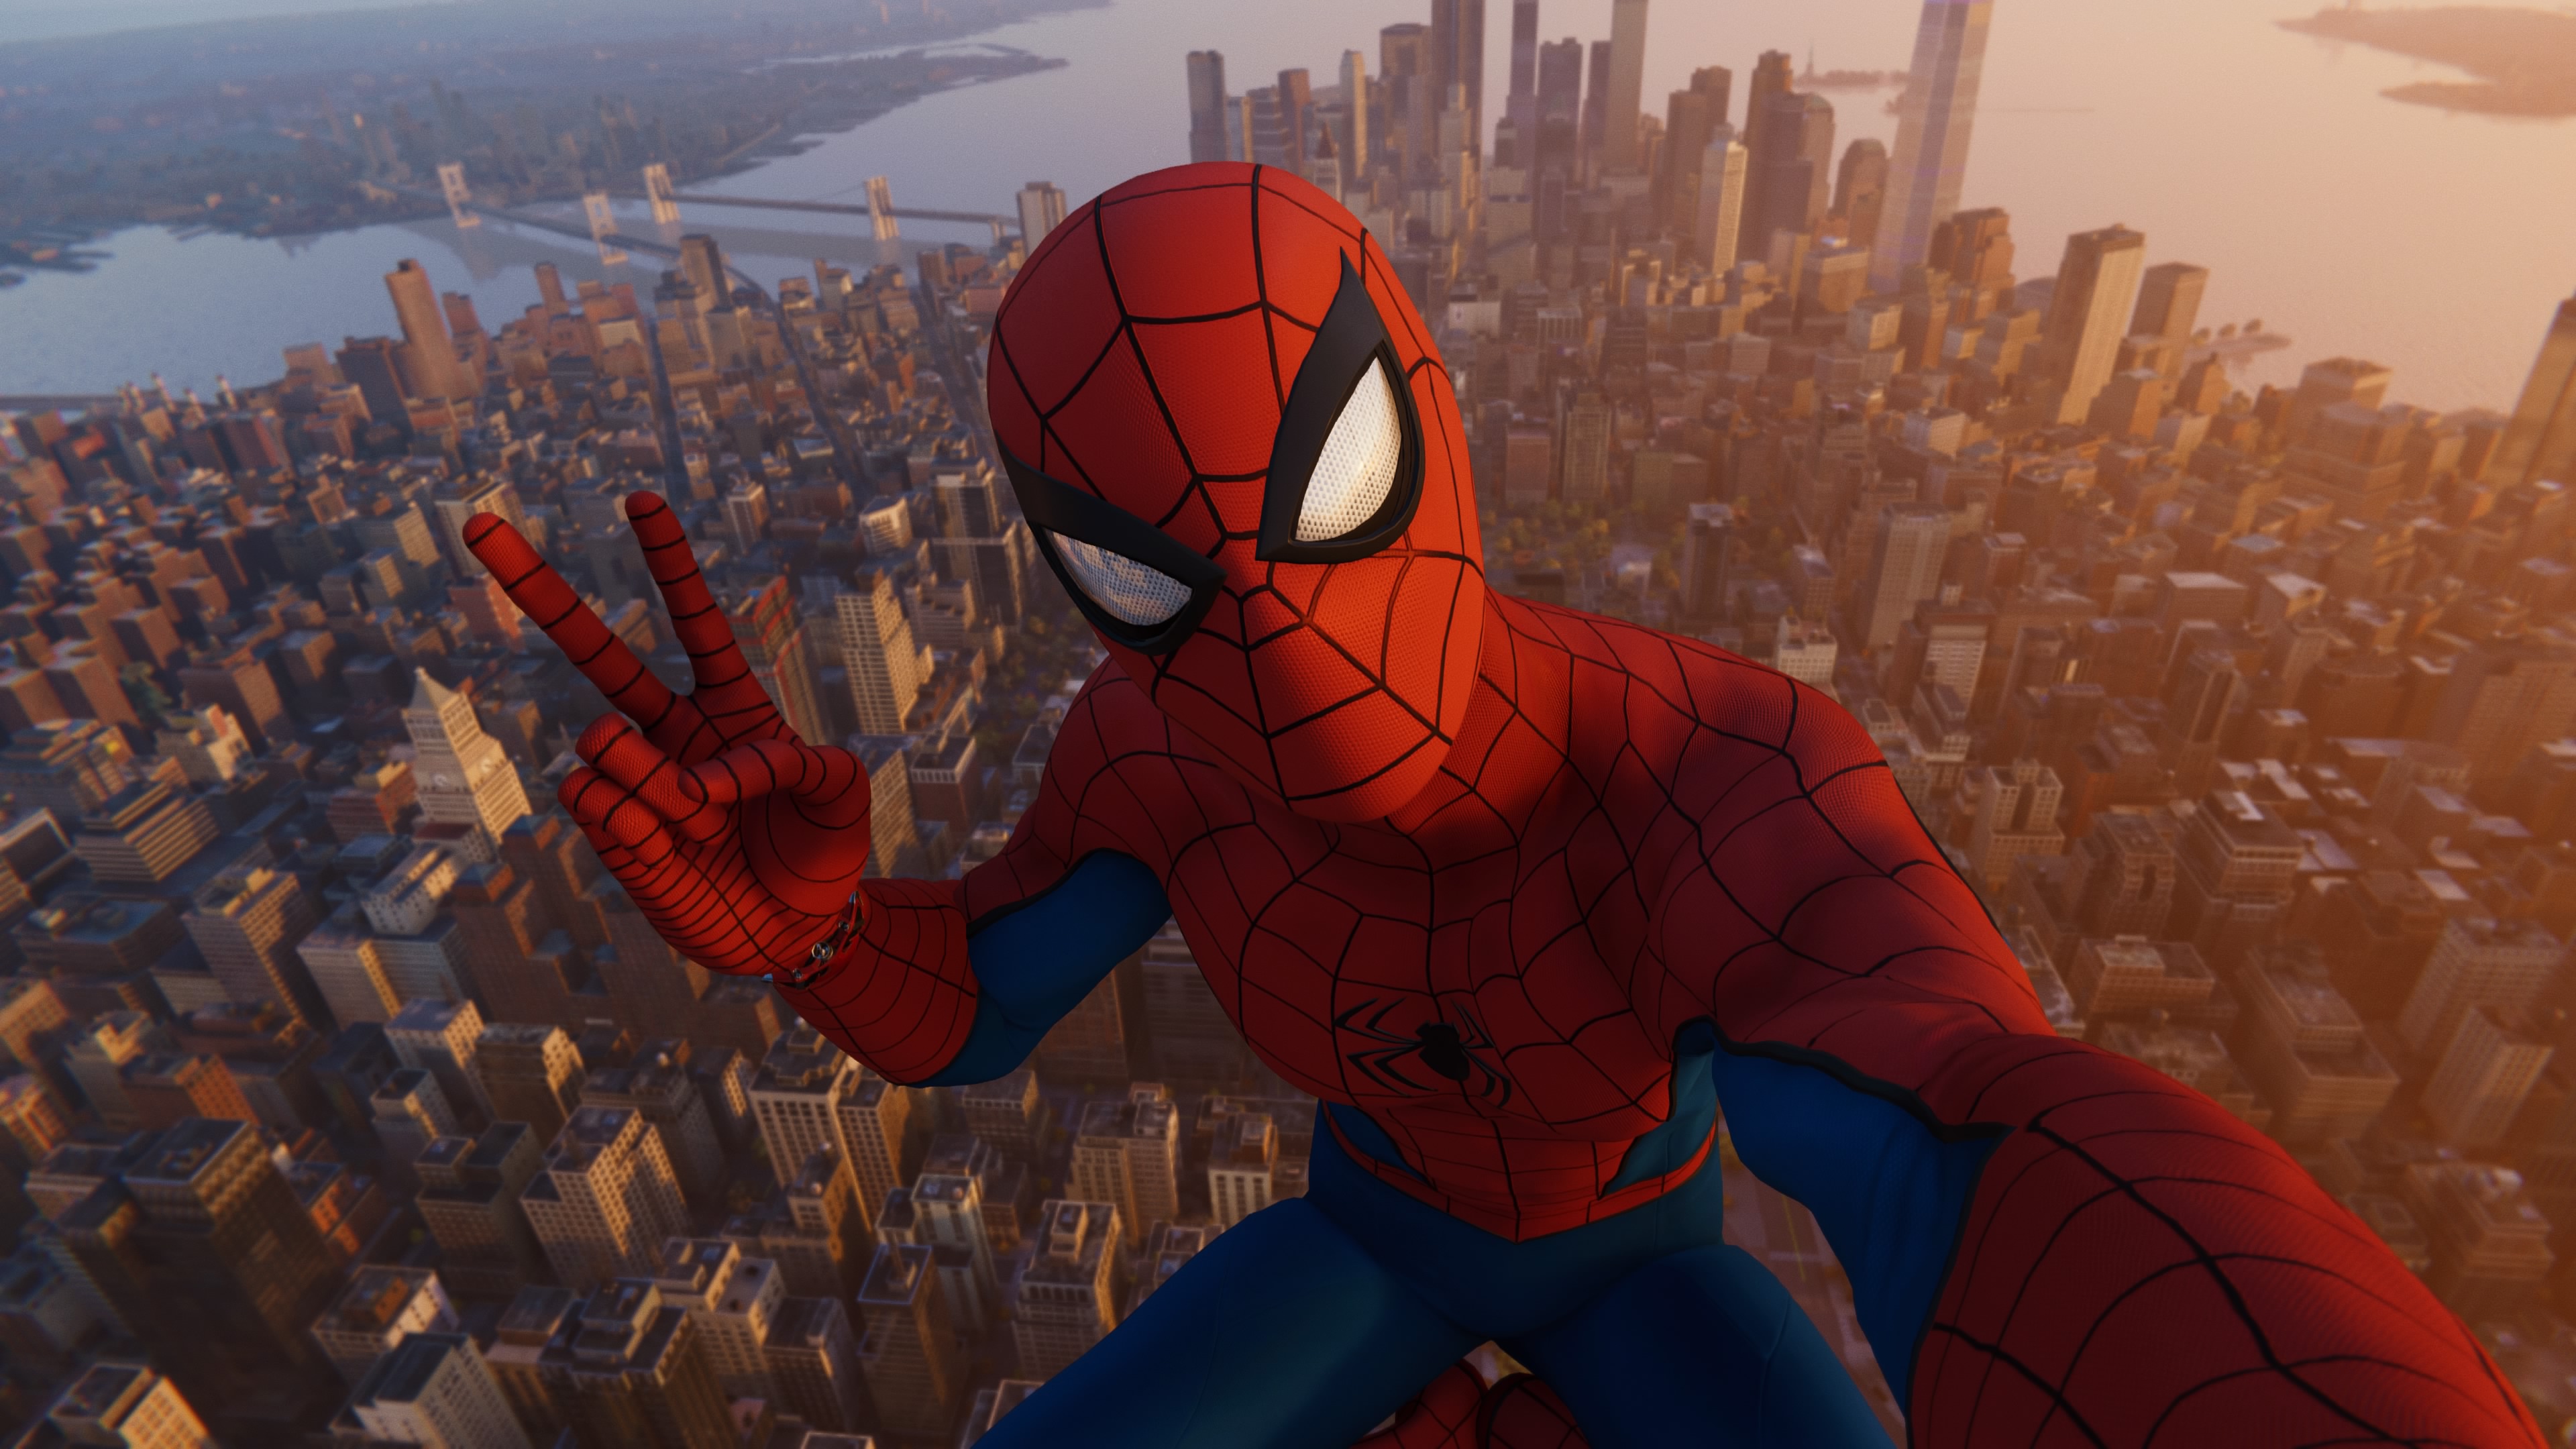 Spiderman NYC Skyscraper, HD Games, 4k Wallpapers, Images ...